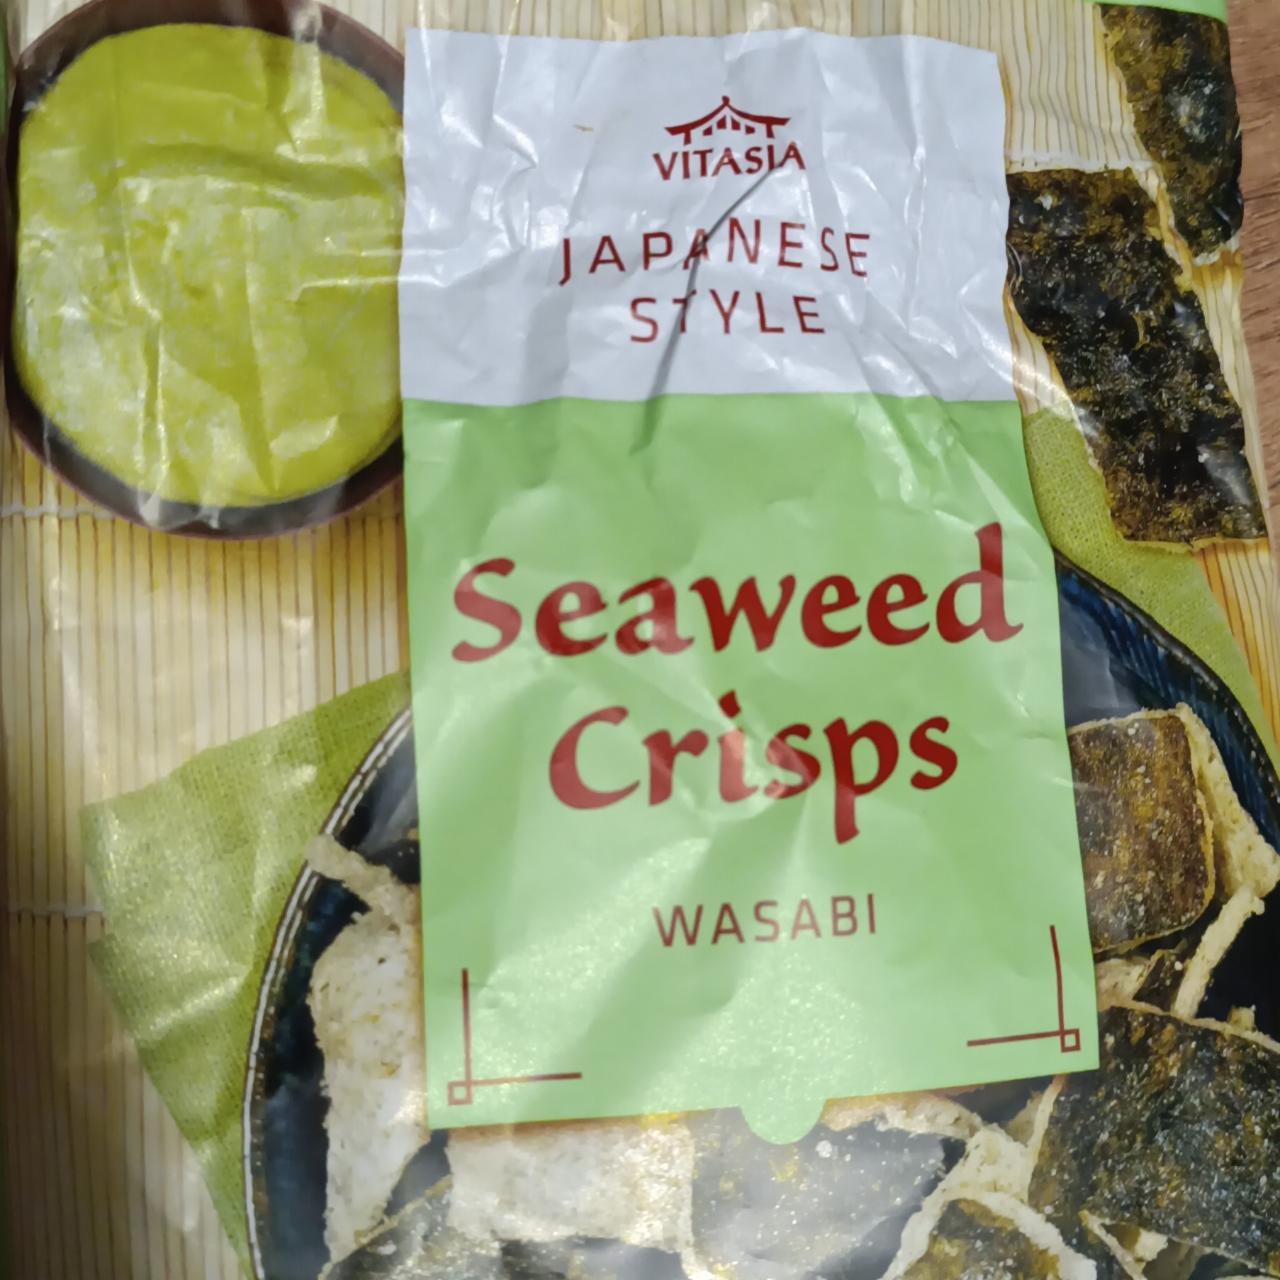 Fotografie - Seaweed Crisps Wasabi Vitasia Japanese style